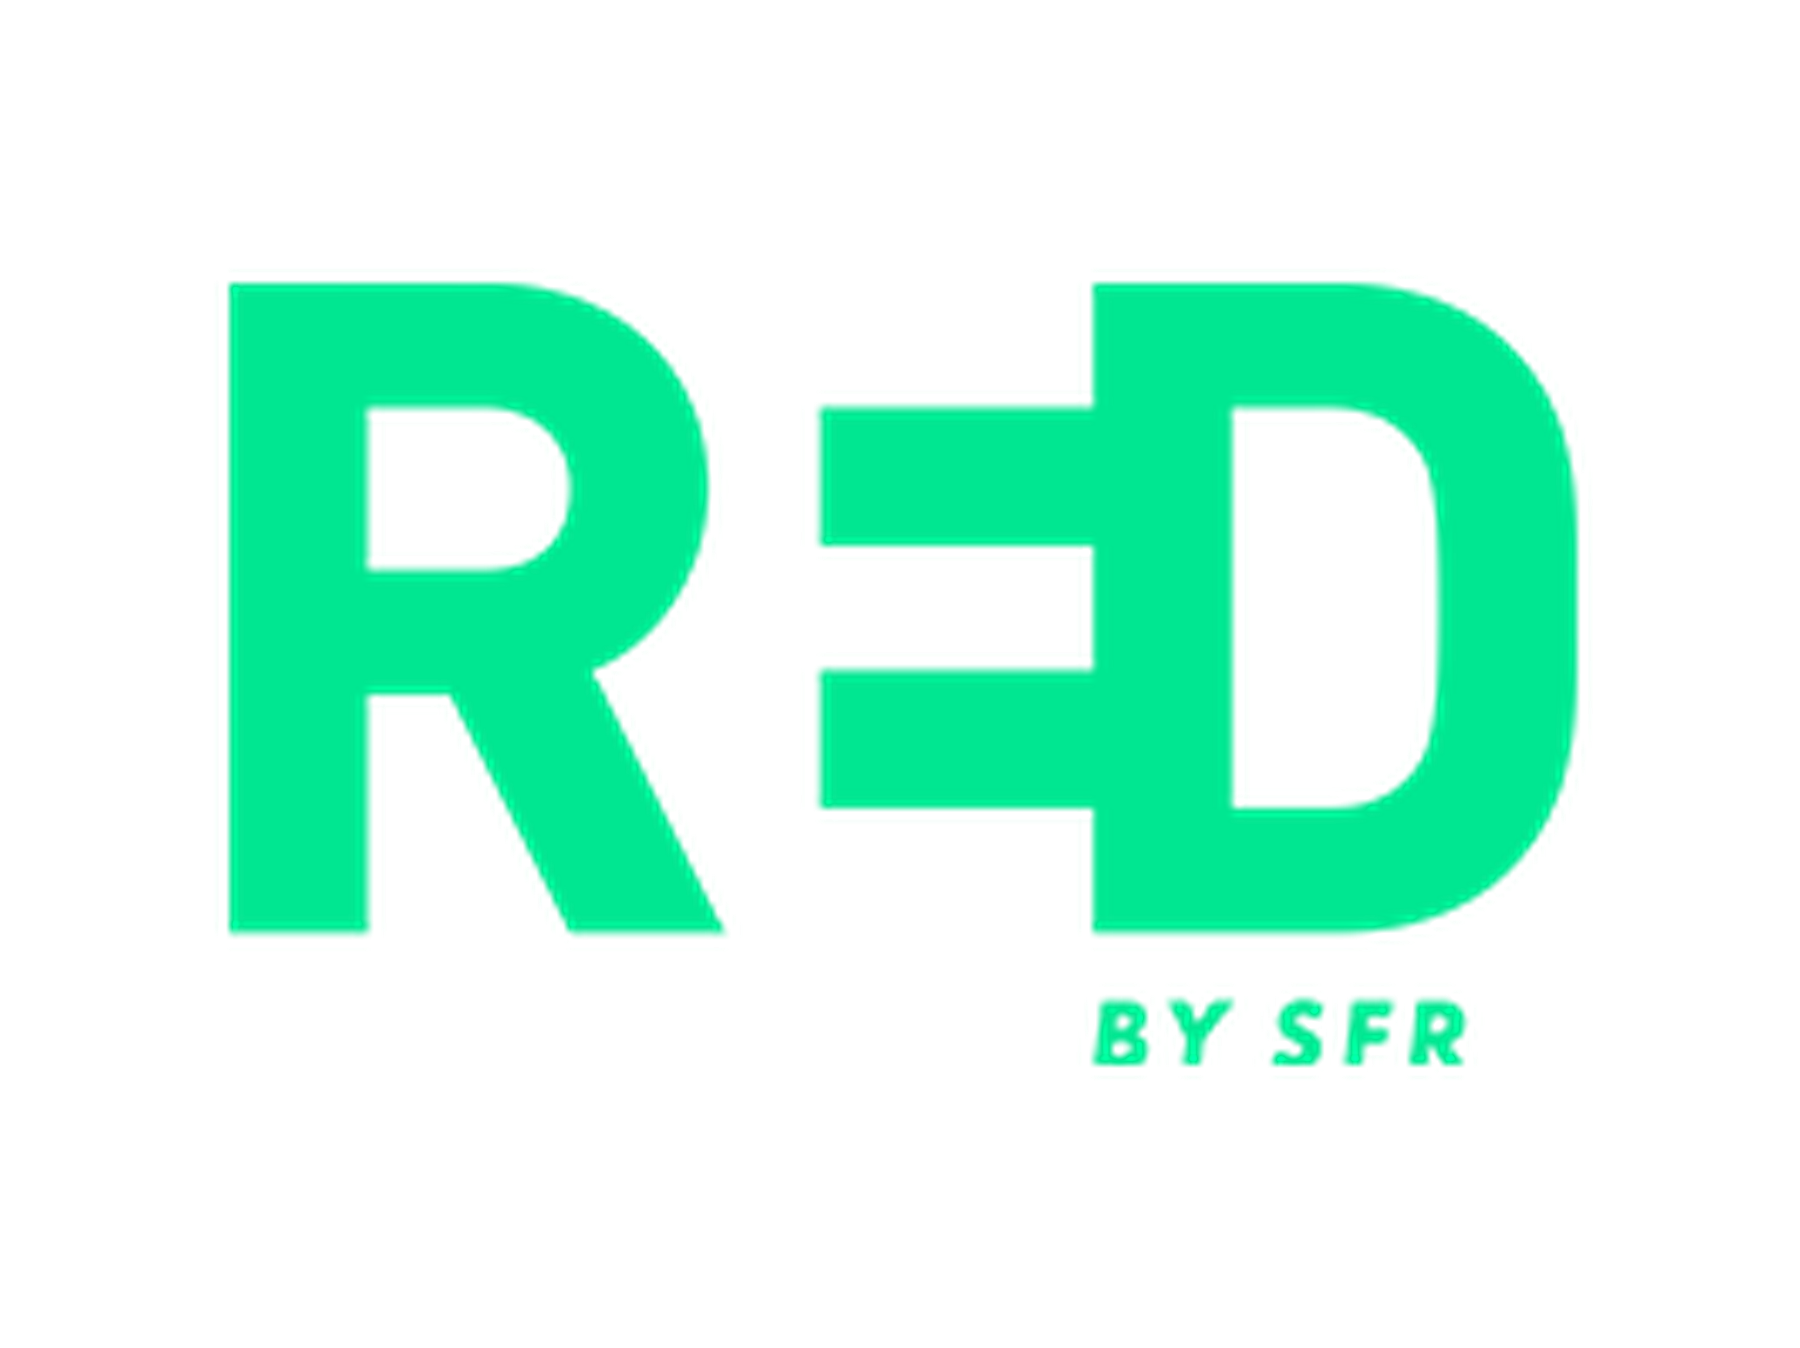 Code promo Red SFR